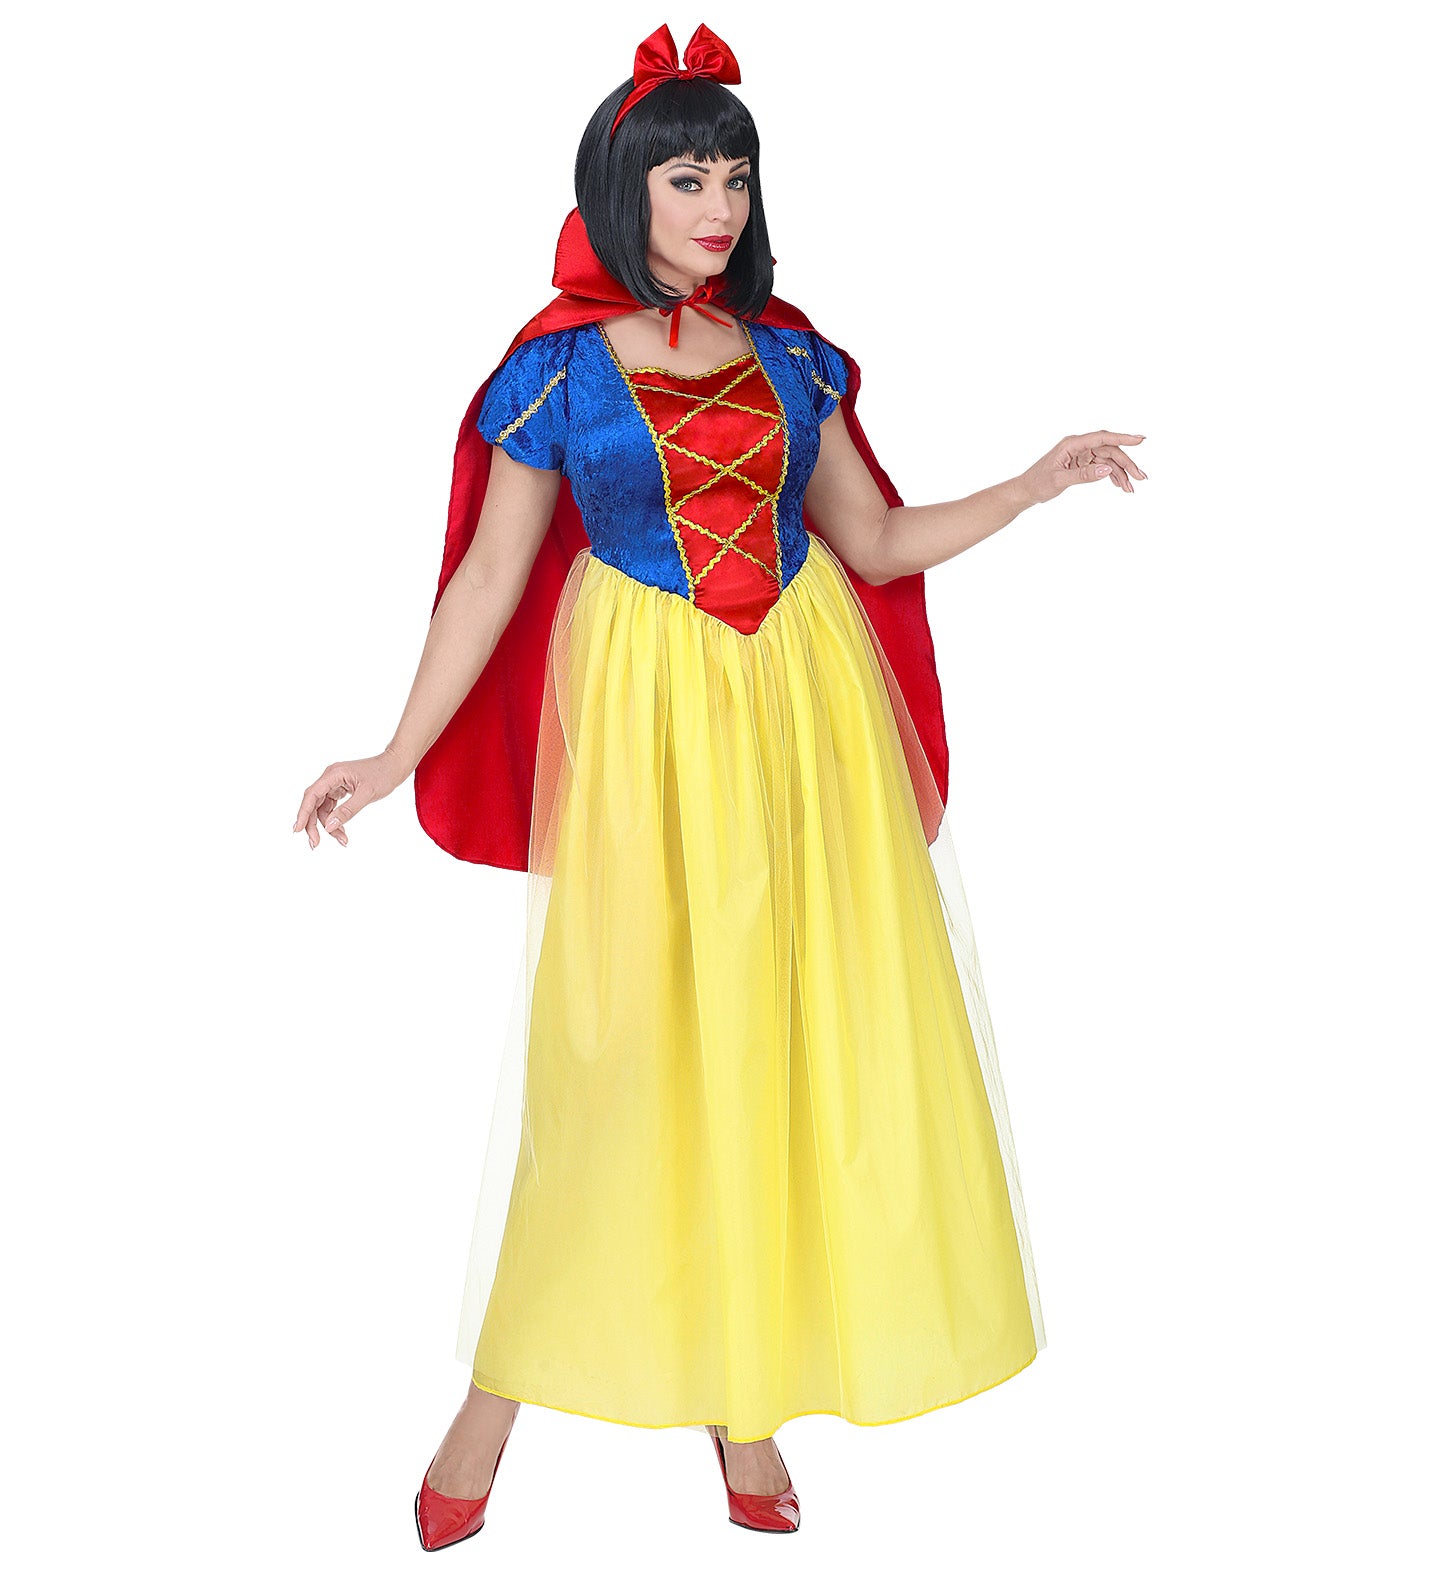 Snow White Fairytale Princess dress